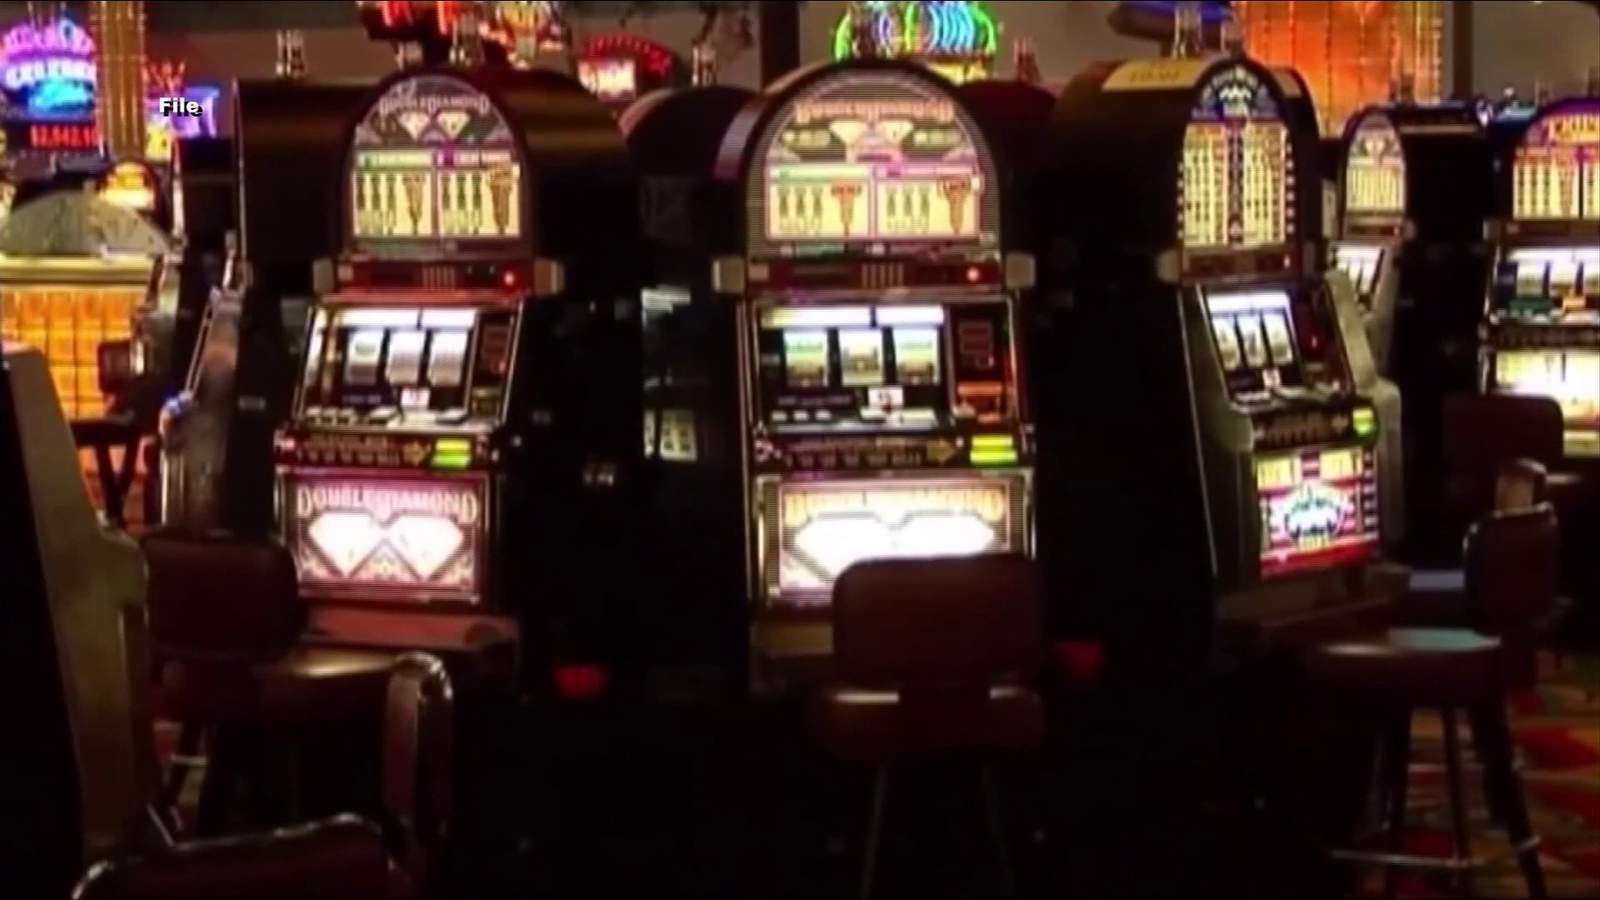 Danville city council members could decide on casino bid soon